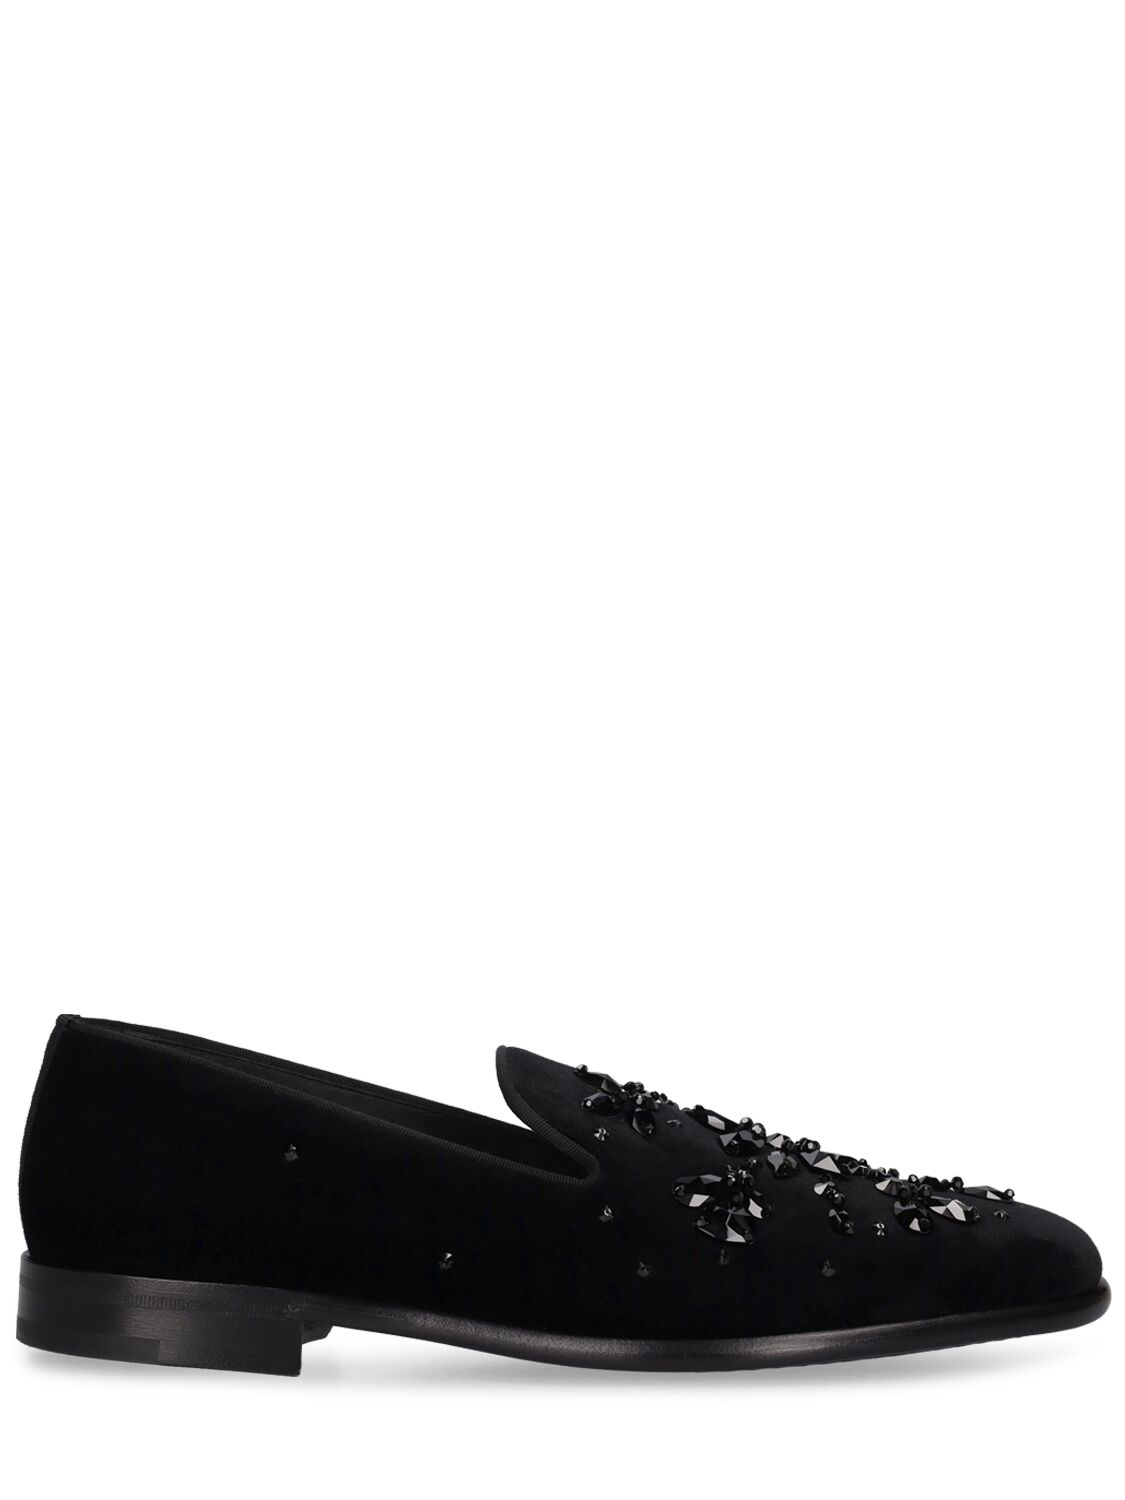 Dolce & Gabbana Elegant Embroidered Slippers In Black